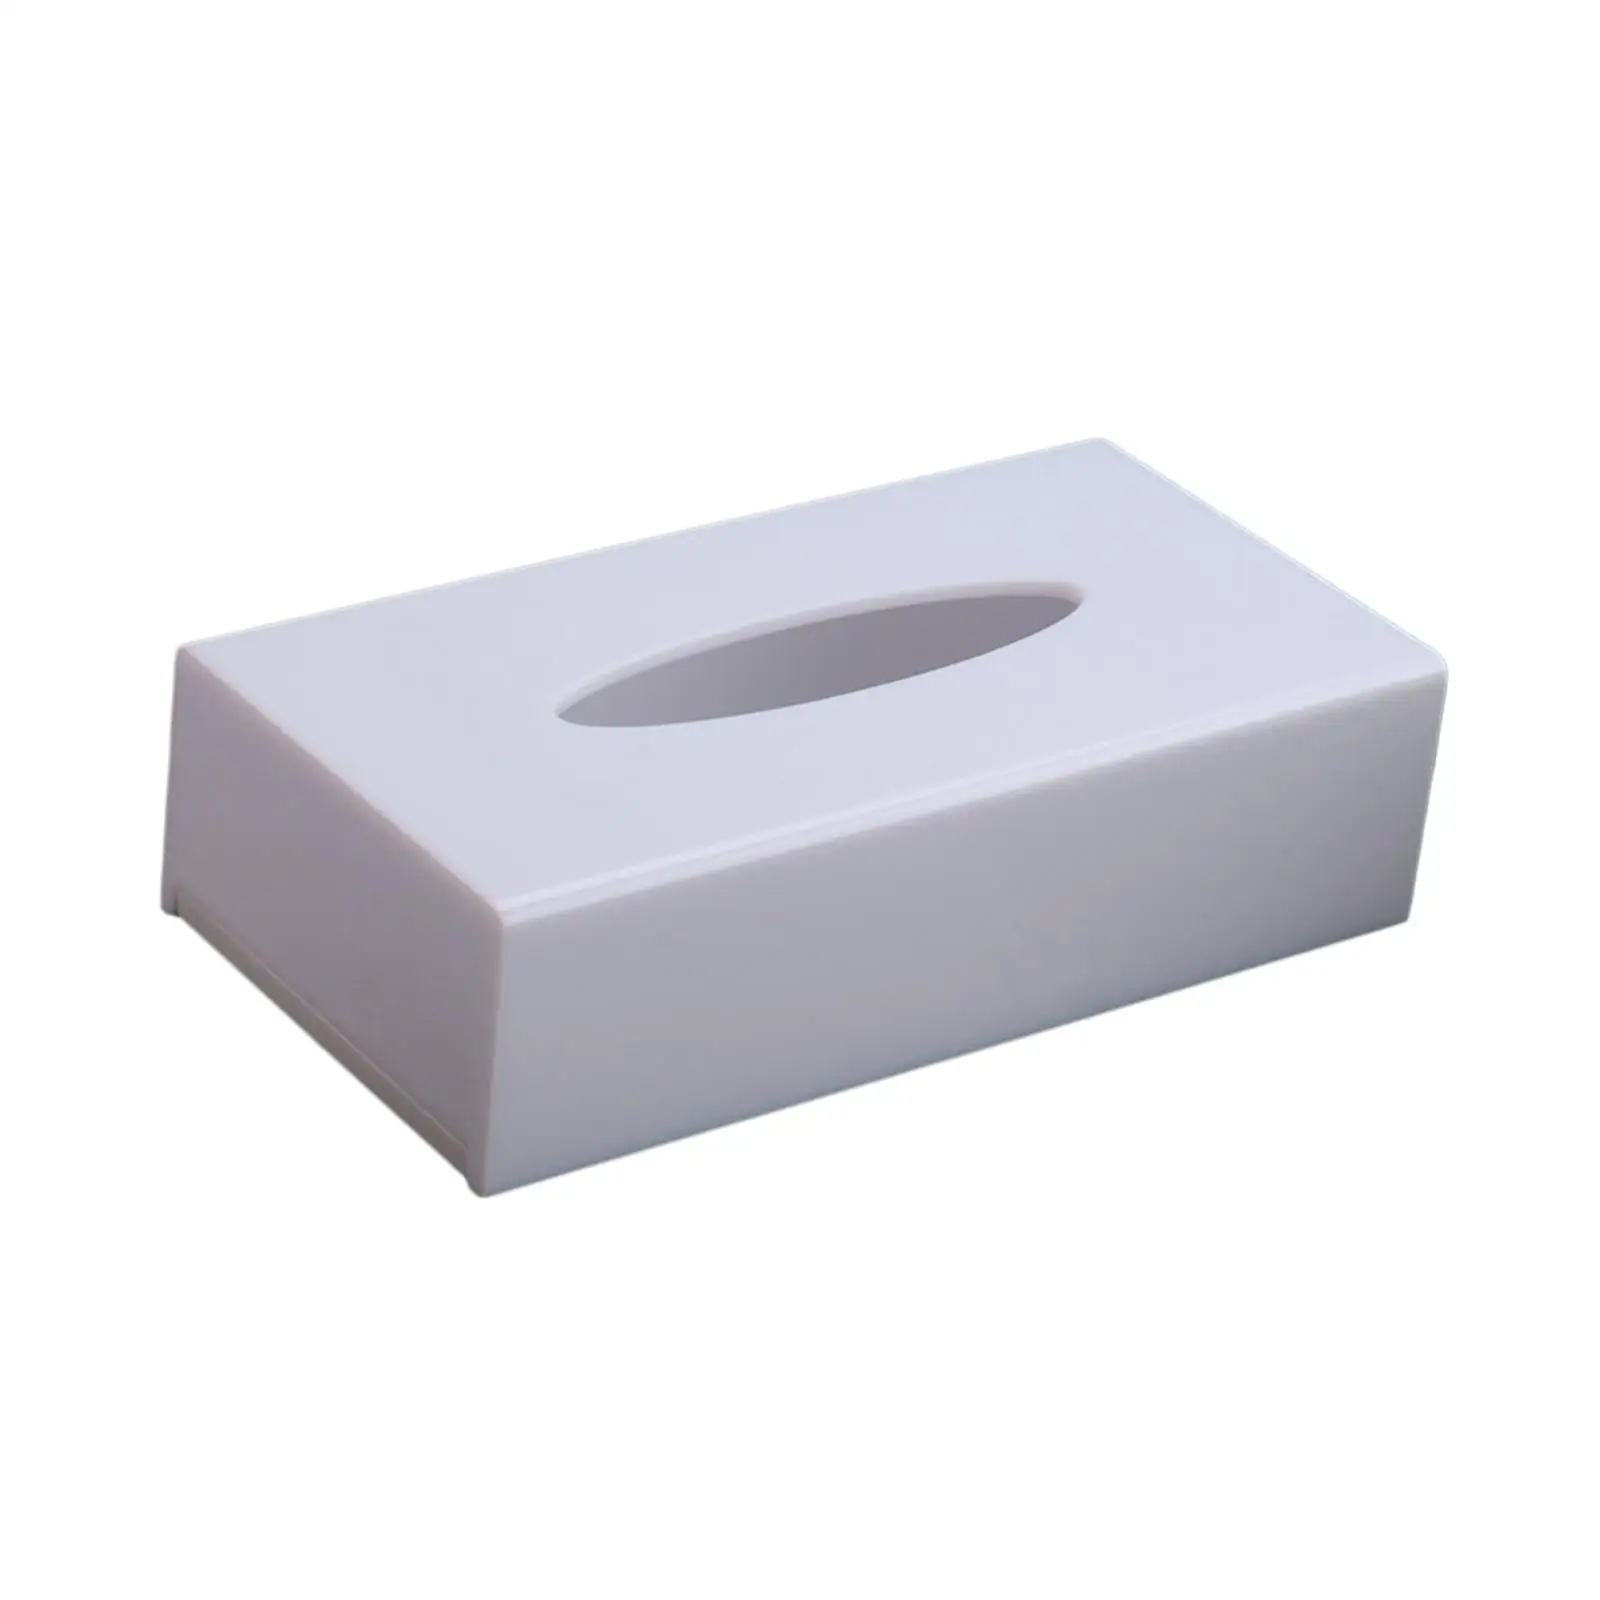 Tissue Holder Acrylic Container Paper Tissue Napkin Holder Napkin Organizer for Toilet Washroom Restroom Restaurant Living Room